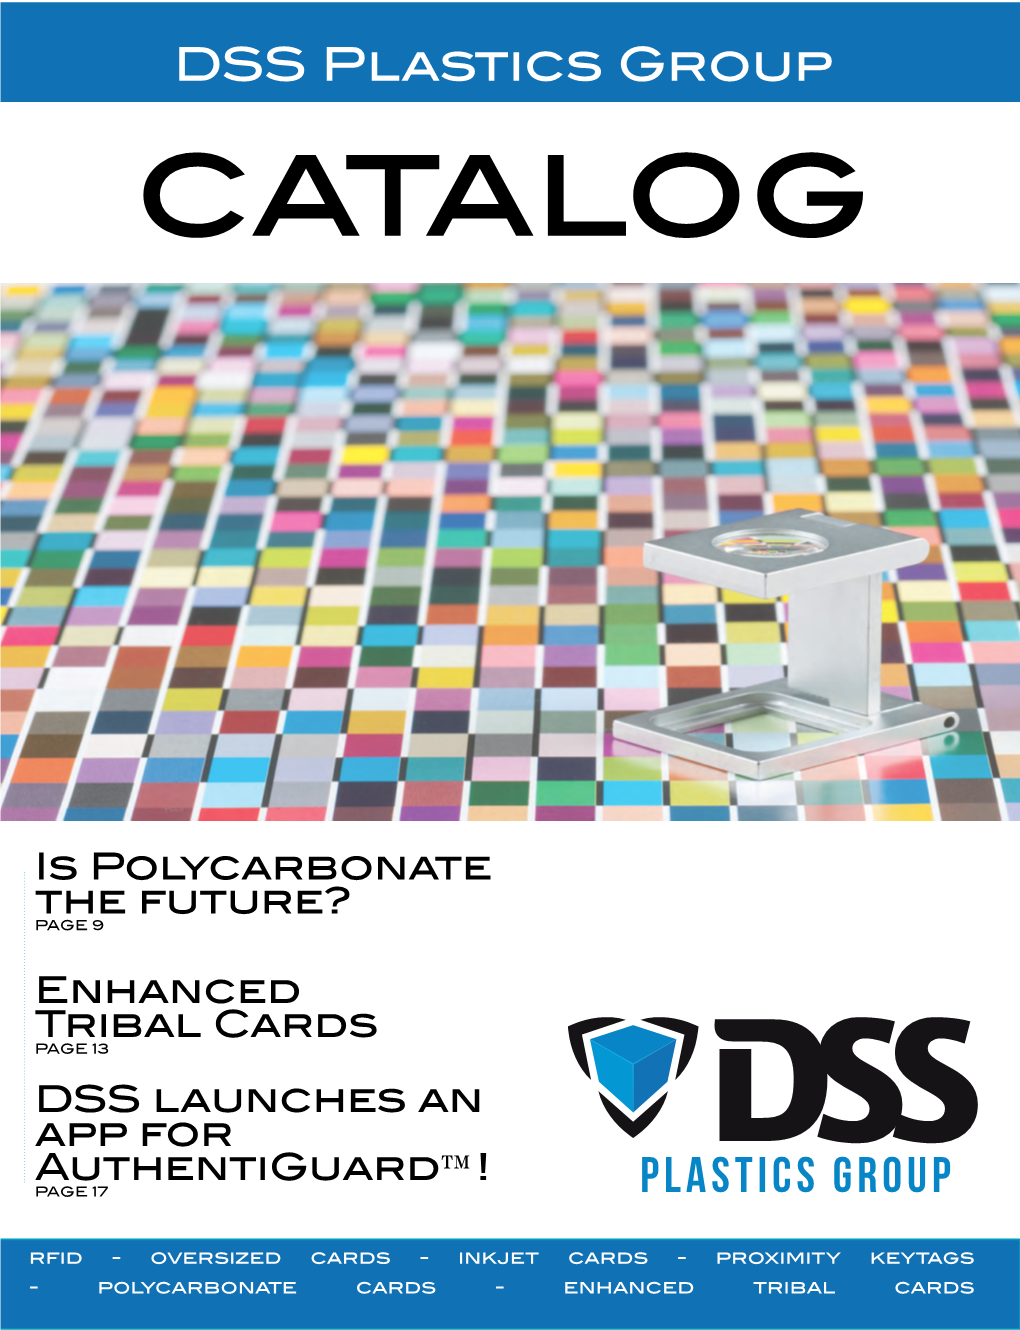 DSS Plastics Group 2017 Catalog